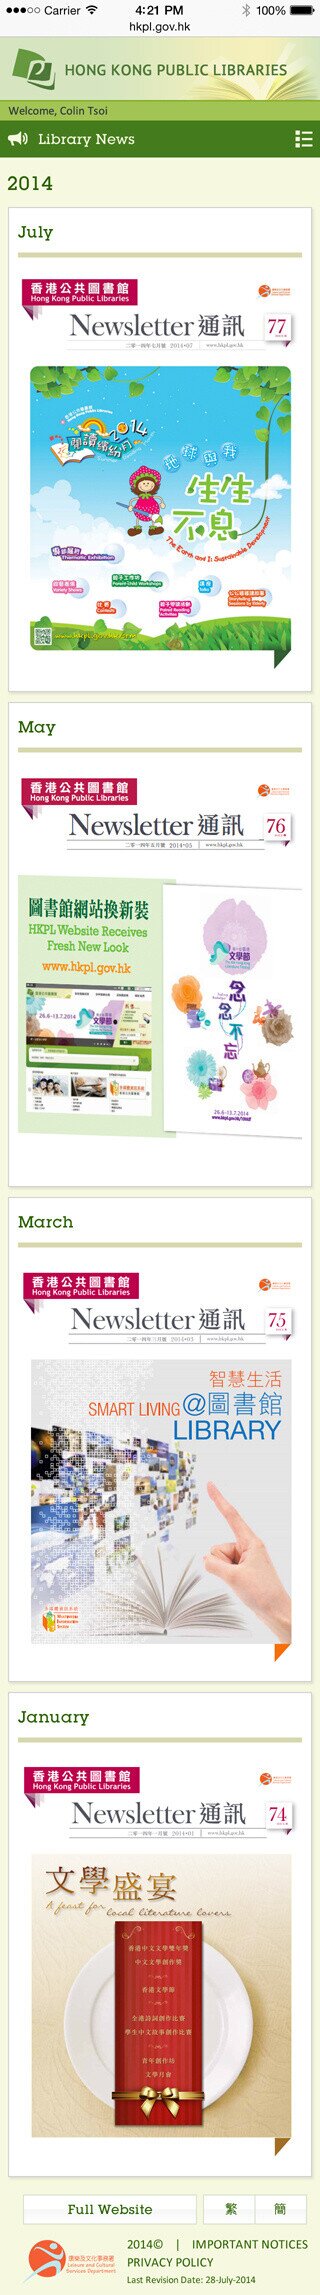 Hong Kong Public Libraries website screenshot for mobile version 3 of 4